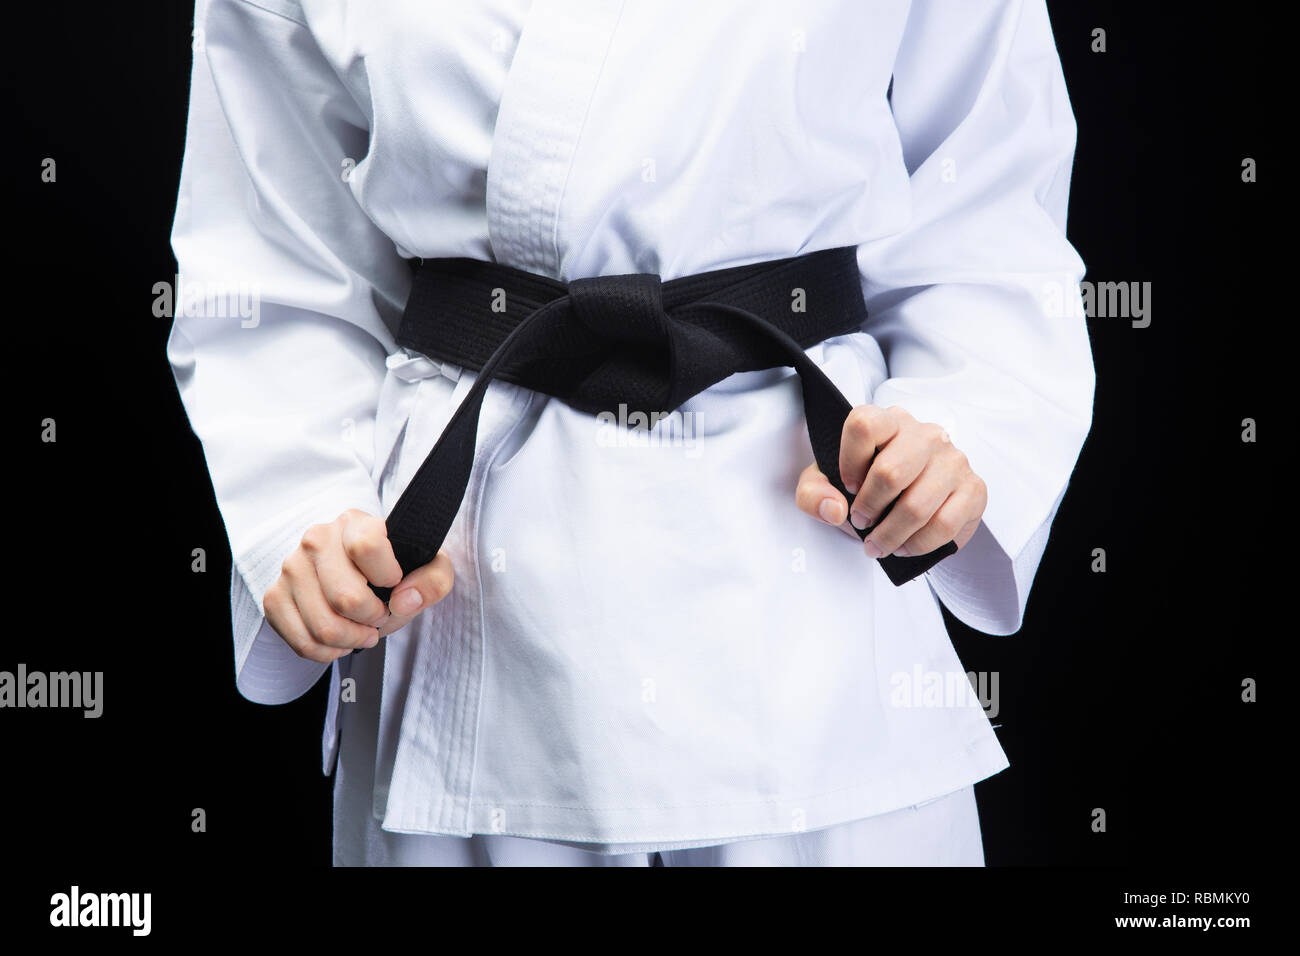 black belt of karate uniform Stock Photo